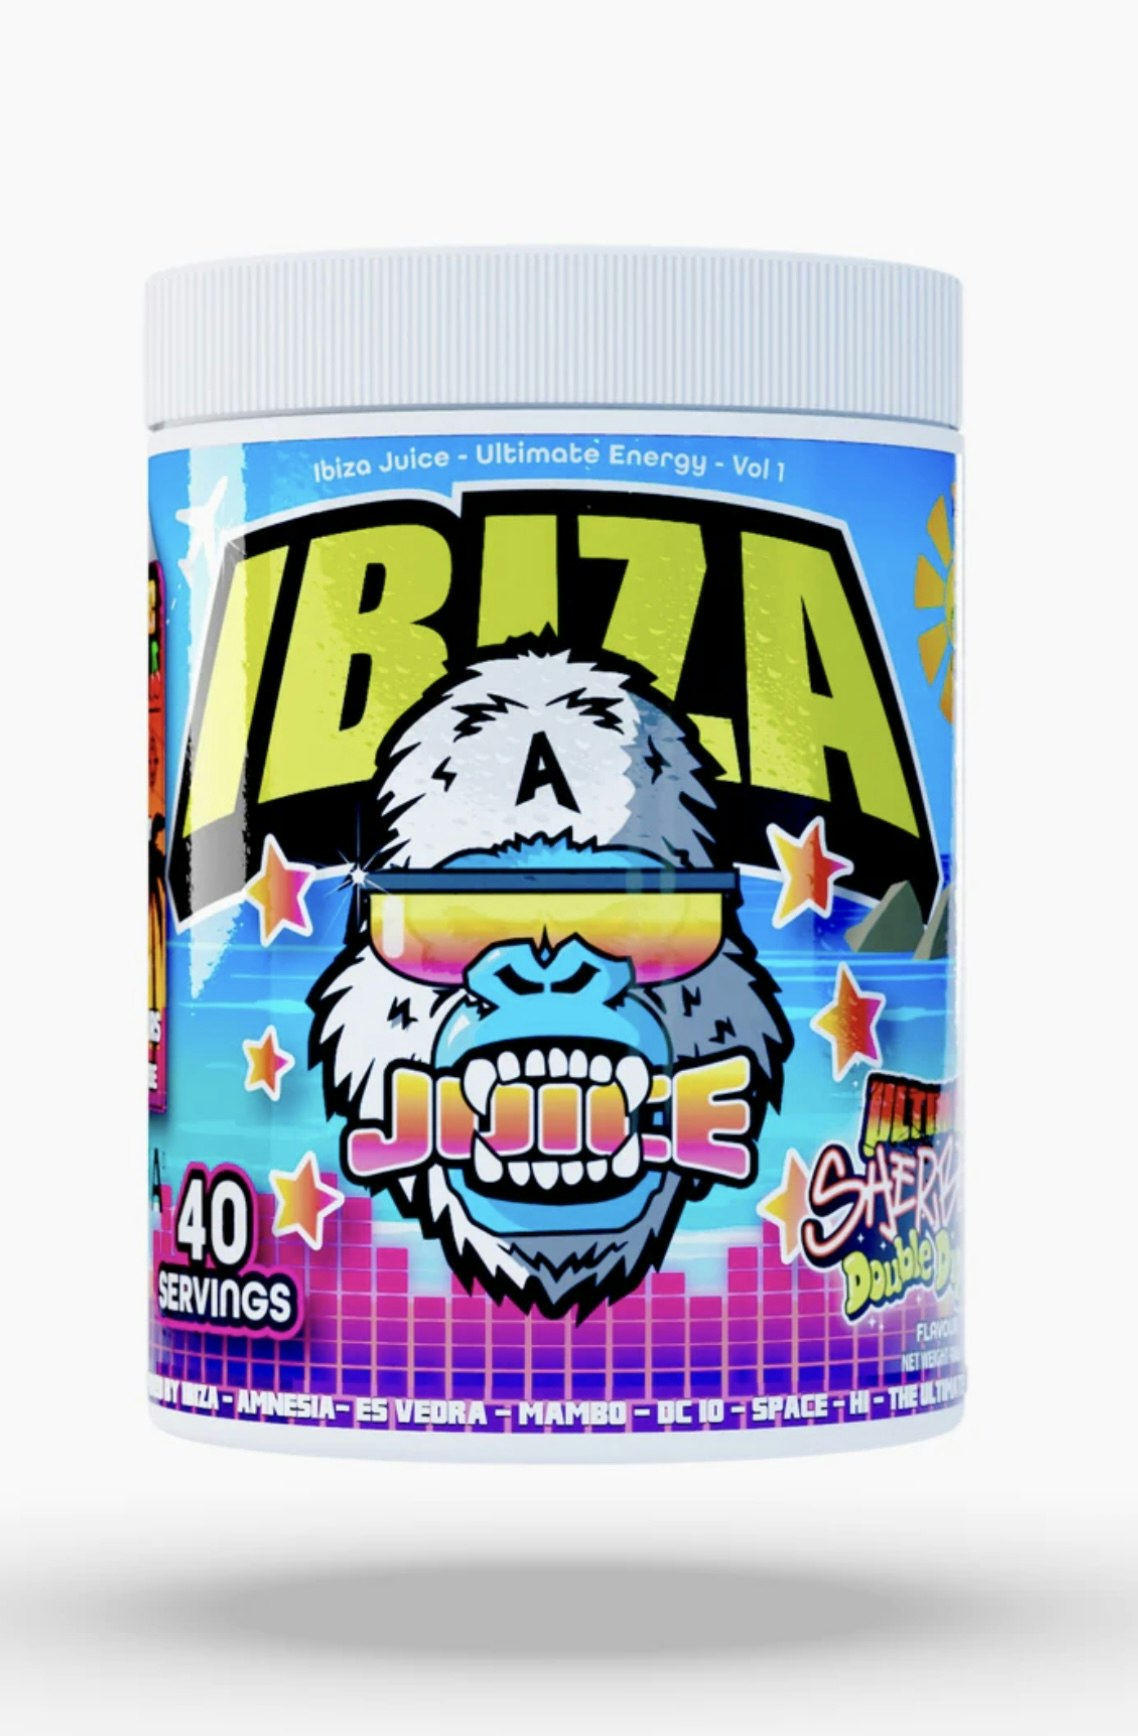 Gorilla Alpha - Ibiza Juice Ultimate Energy